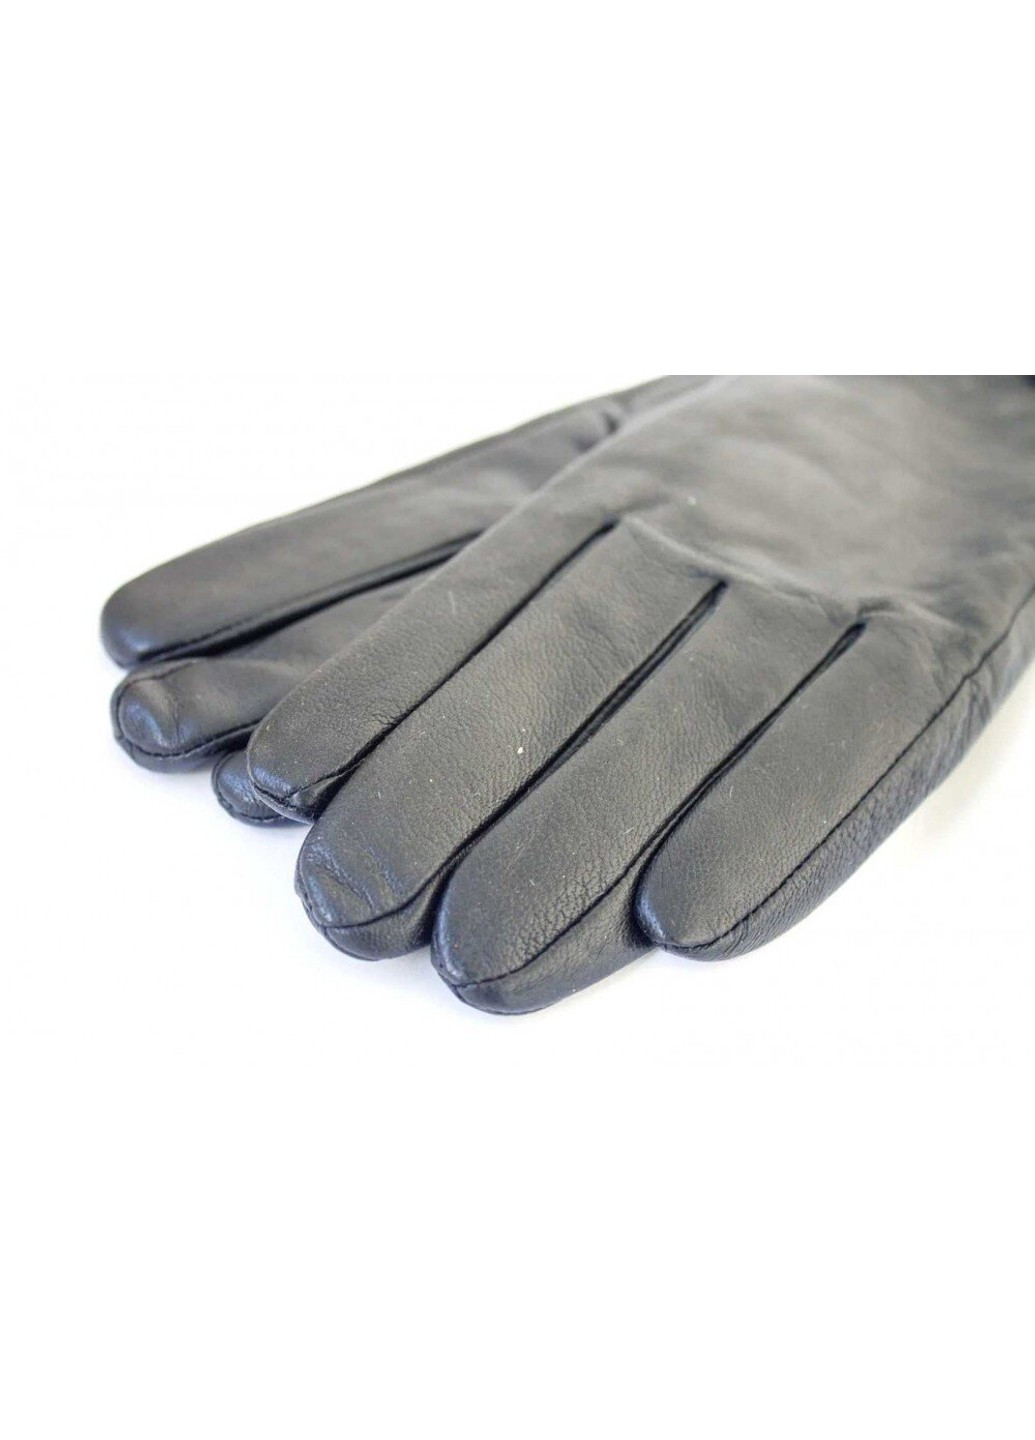 Жіночі шкіряні рукавички чорні 369s2 S Shust Gloves (261486900)